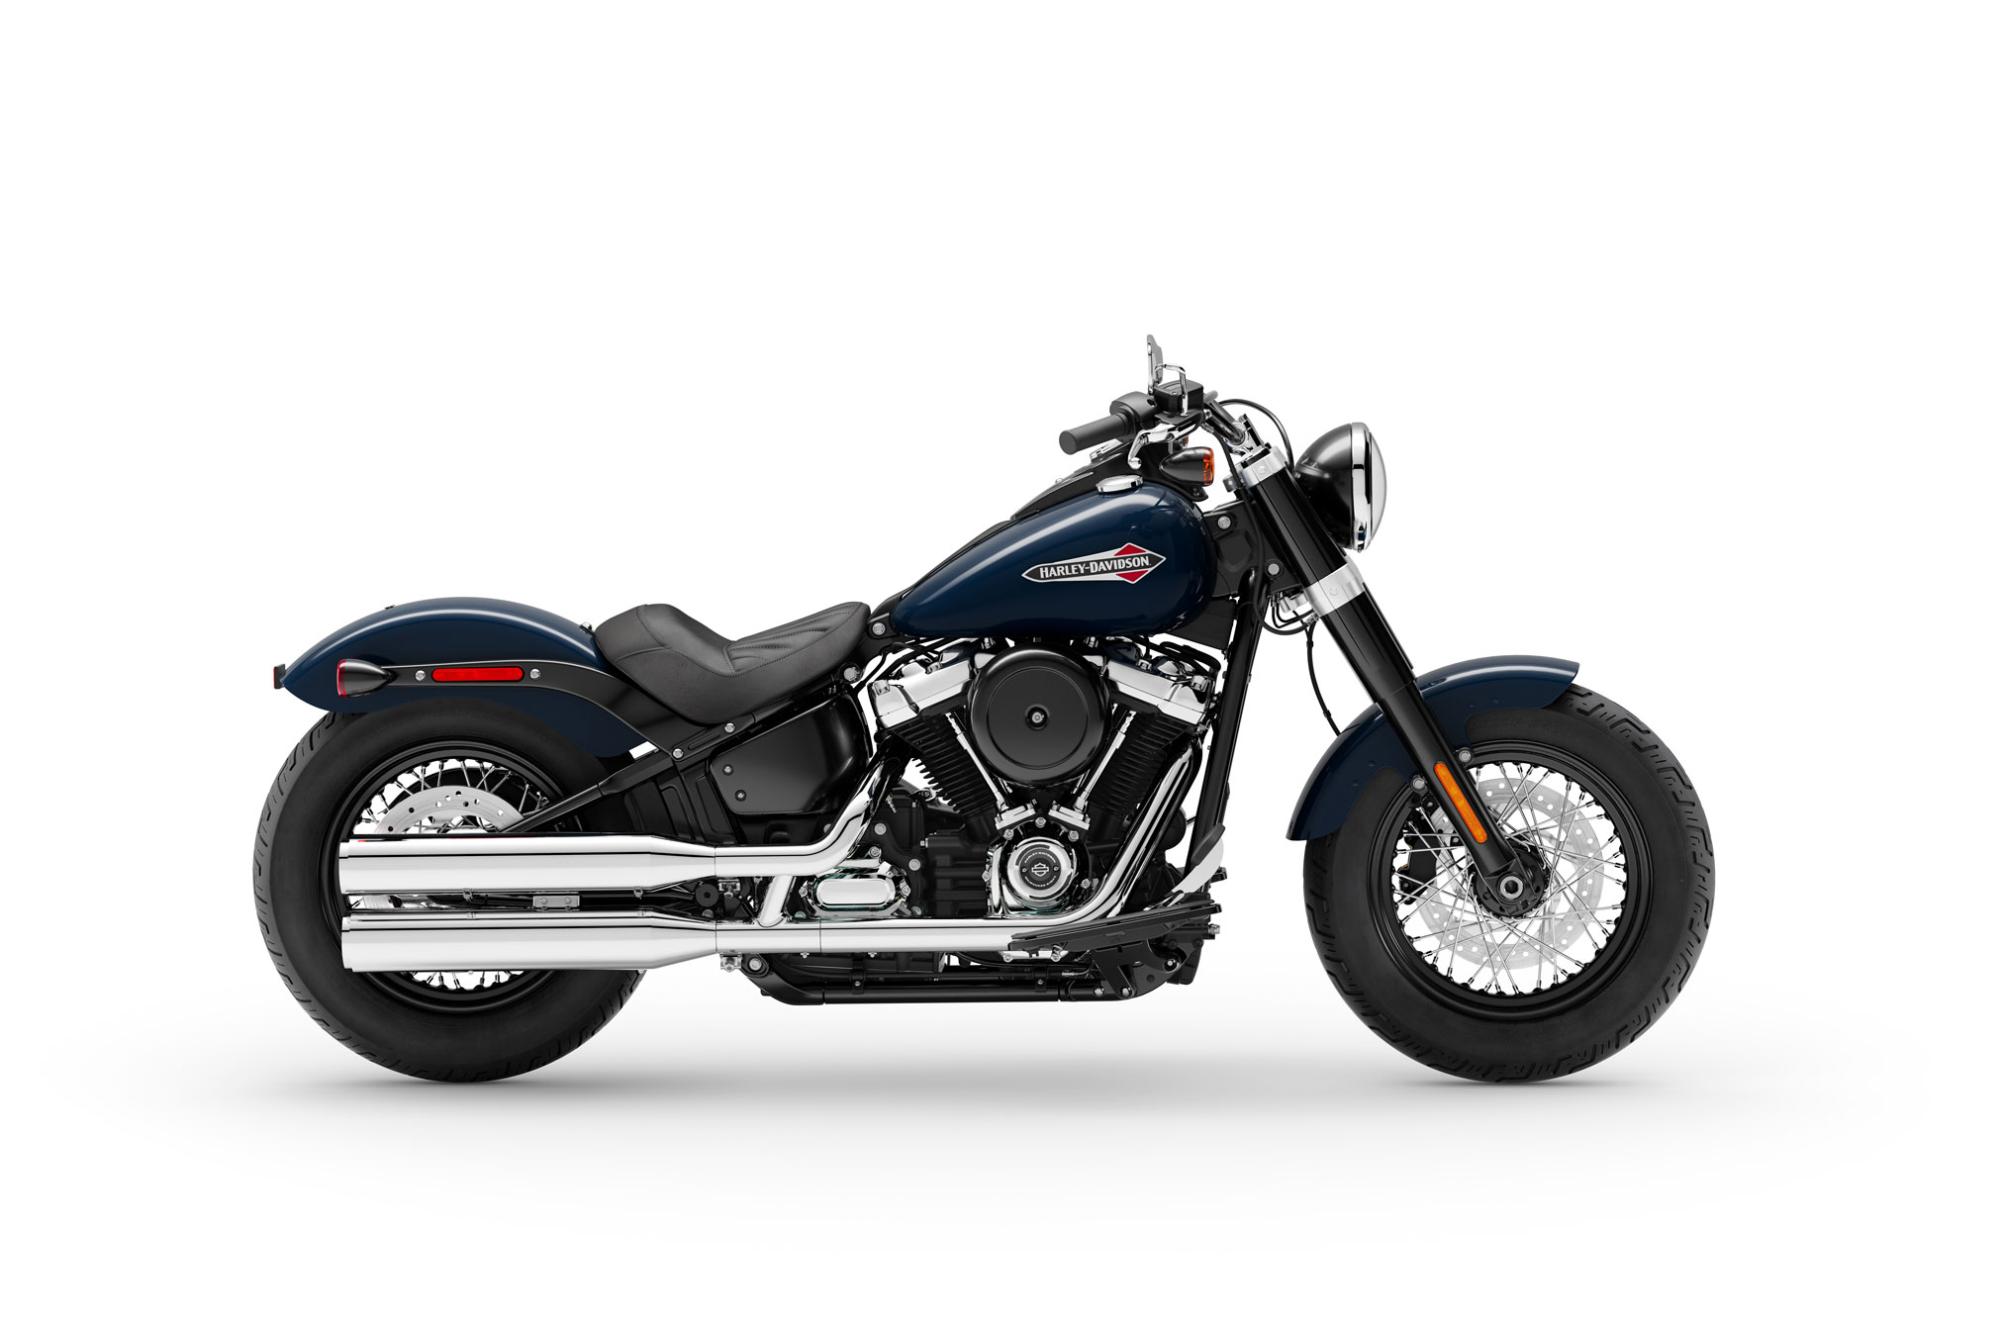 2020 Harley Davidson Motorcycle Model List webBikeWorld